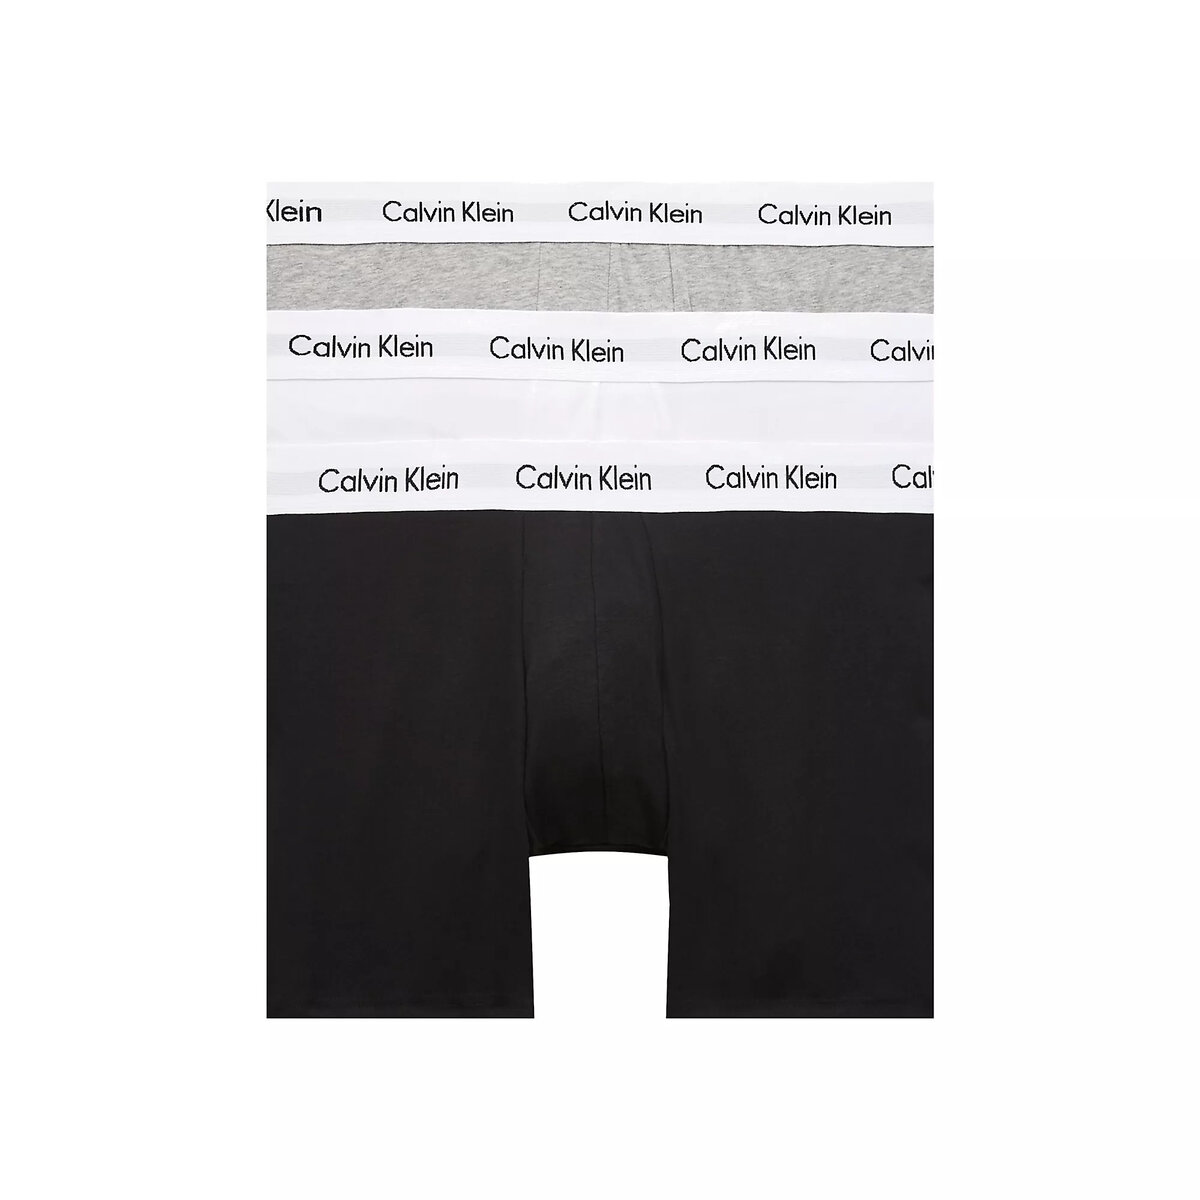 Mužské boxerky Calvin Klein (3 ks), S i652_000NB1770AMP1001